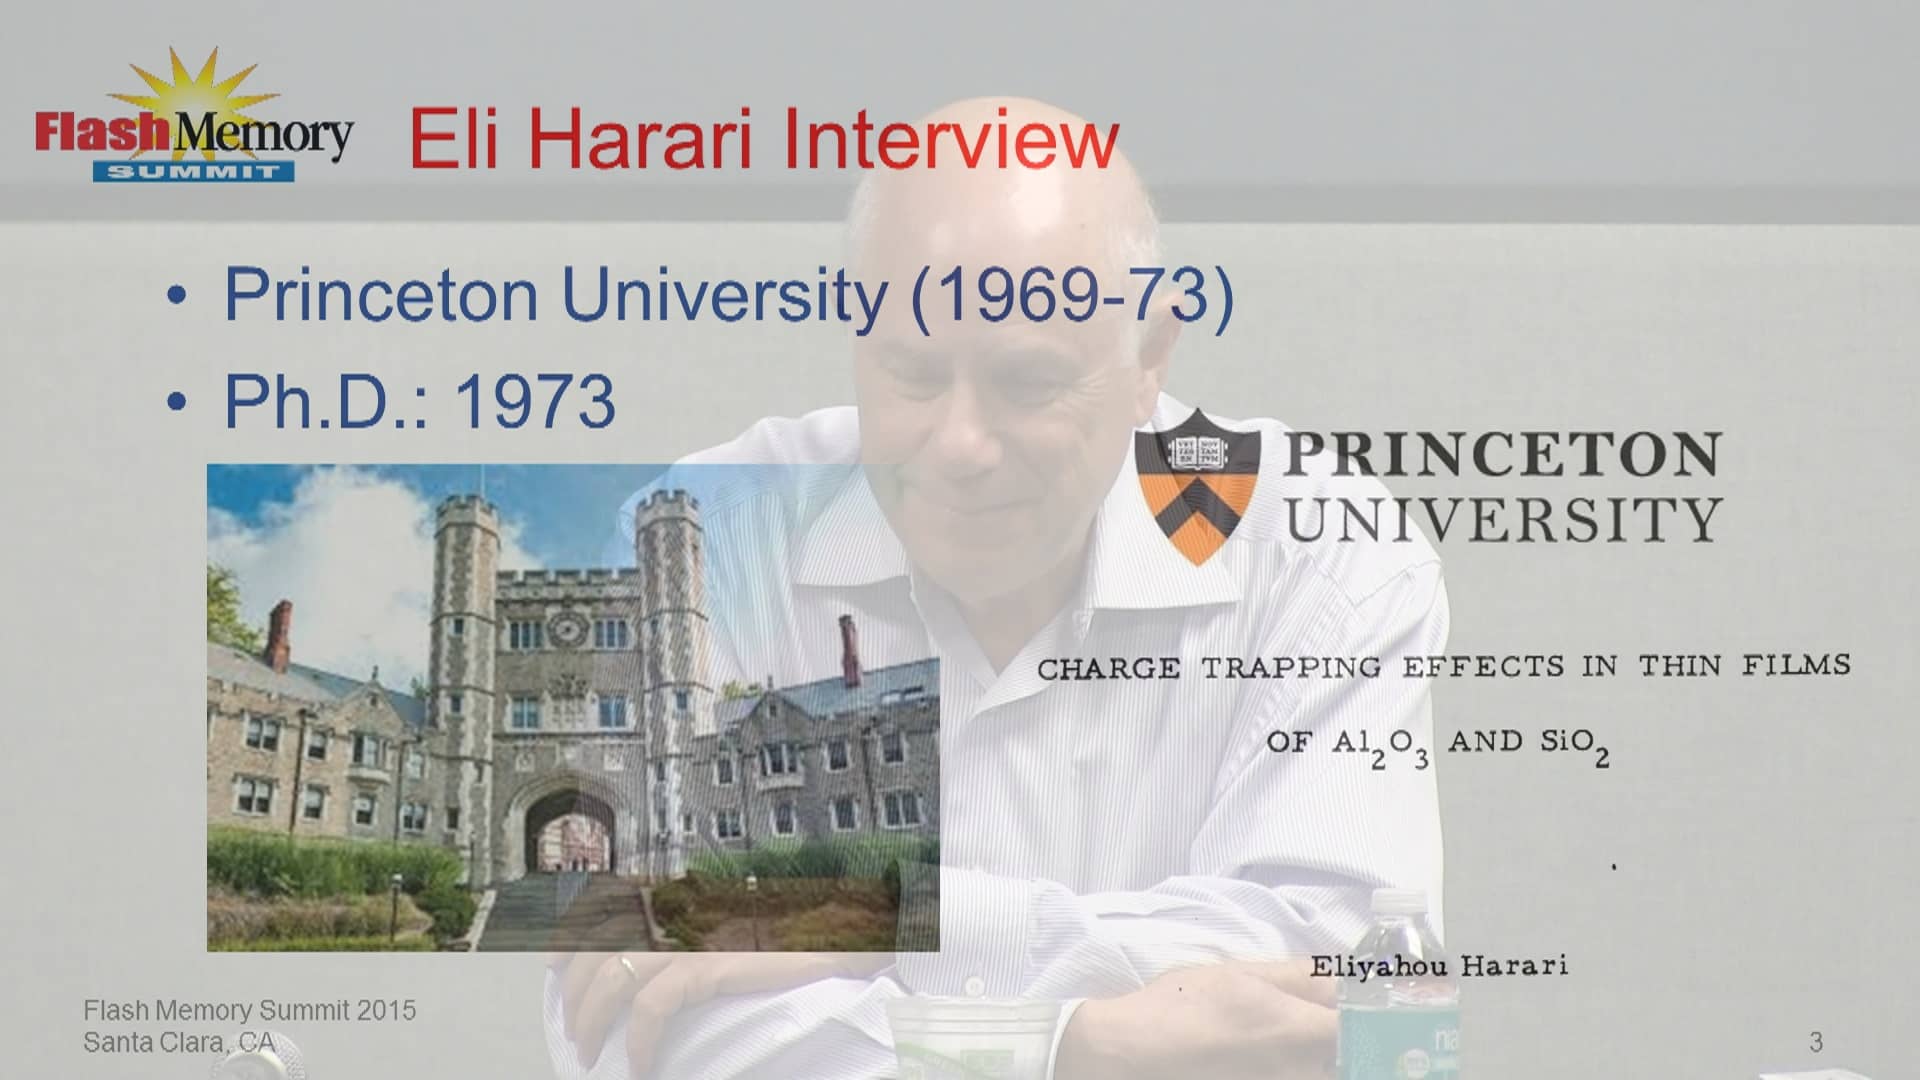 Eli Harari’s Time at Princeton